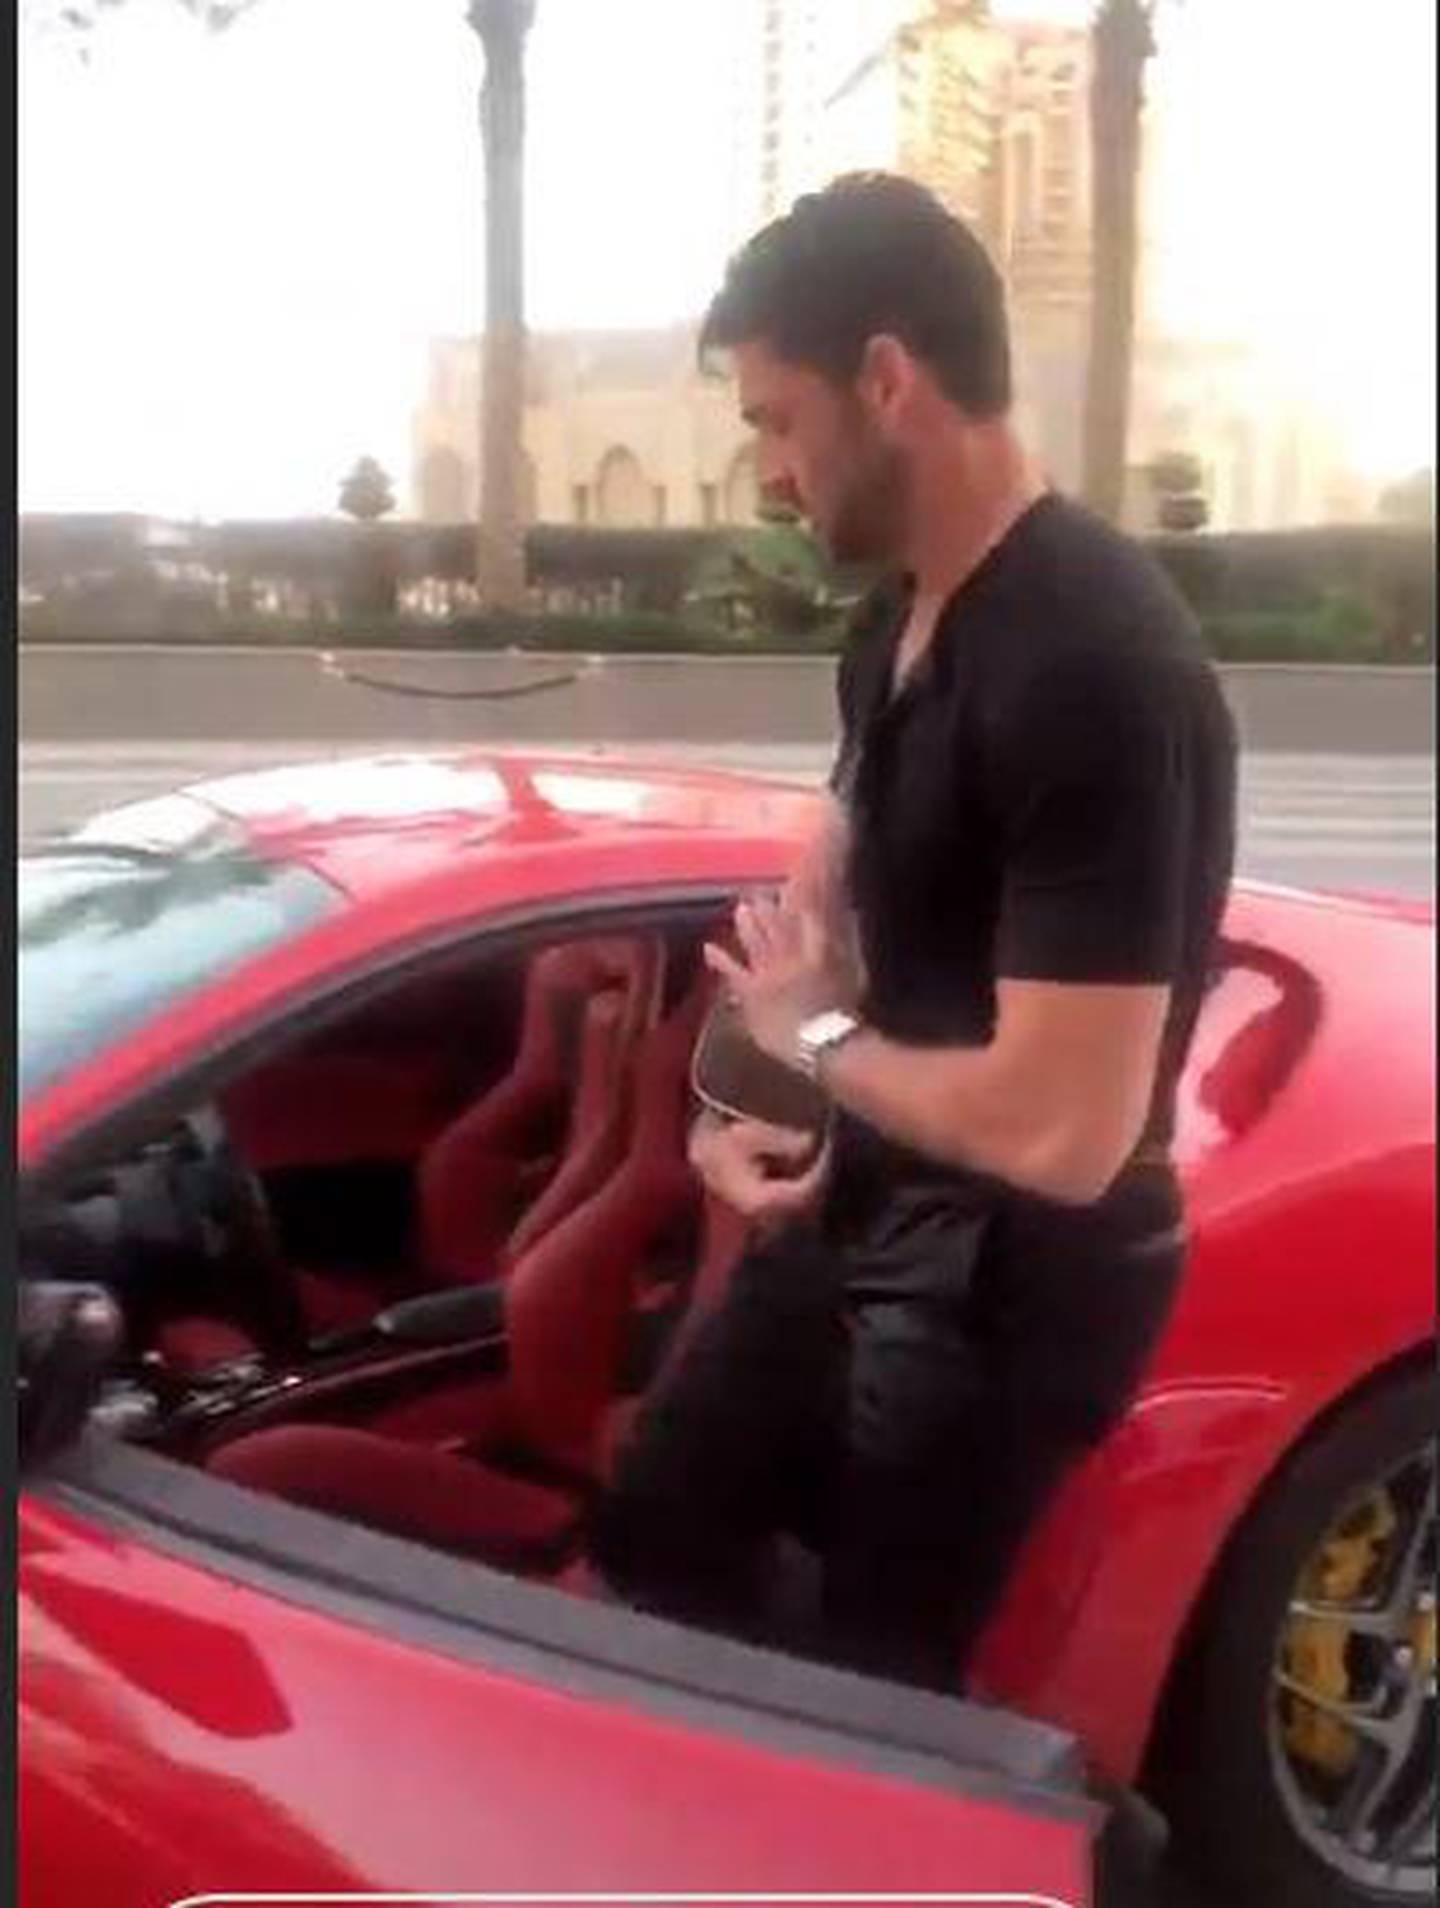 Michele Morrone shared a video of himself behind the wheel of a red Ferrari. Instagram / Michele Morrone